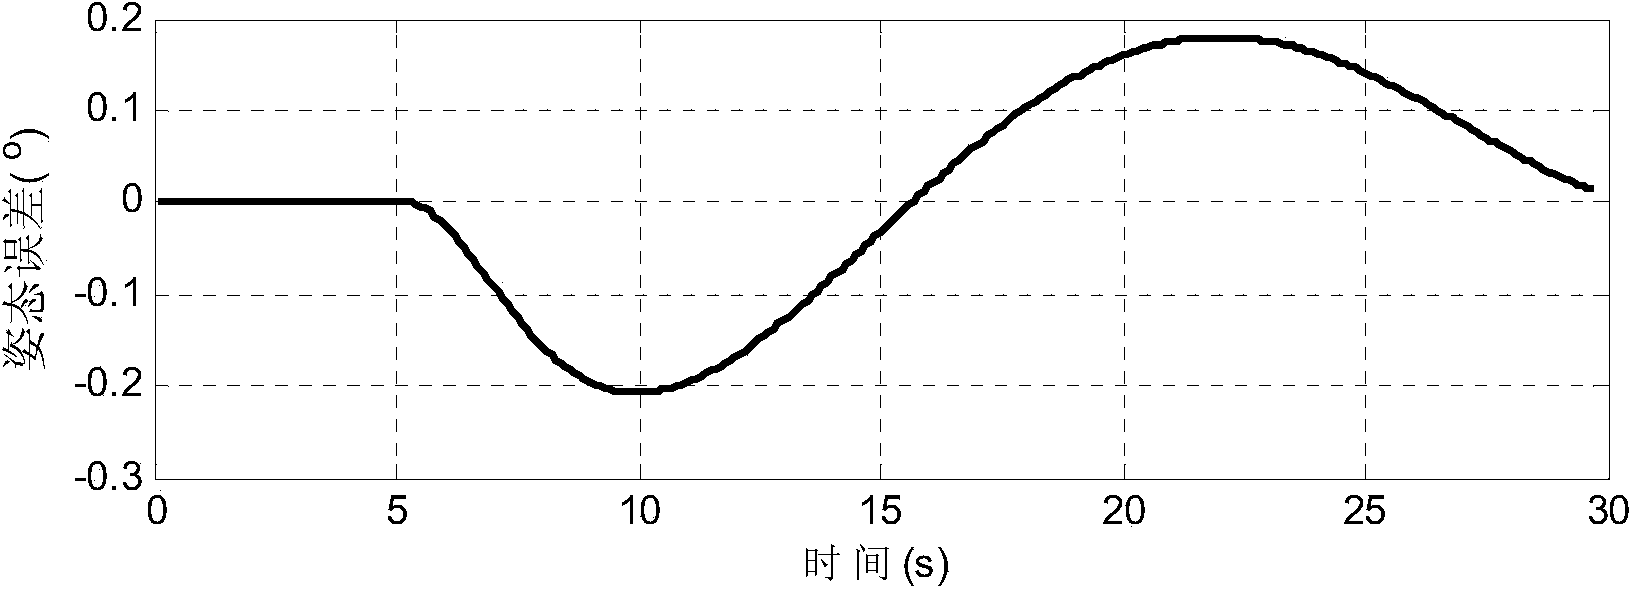 Satellite attitude maneuvering method based on polynomial